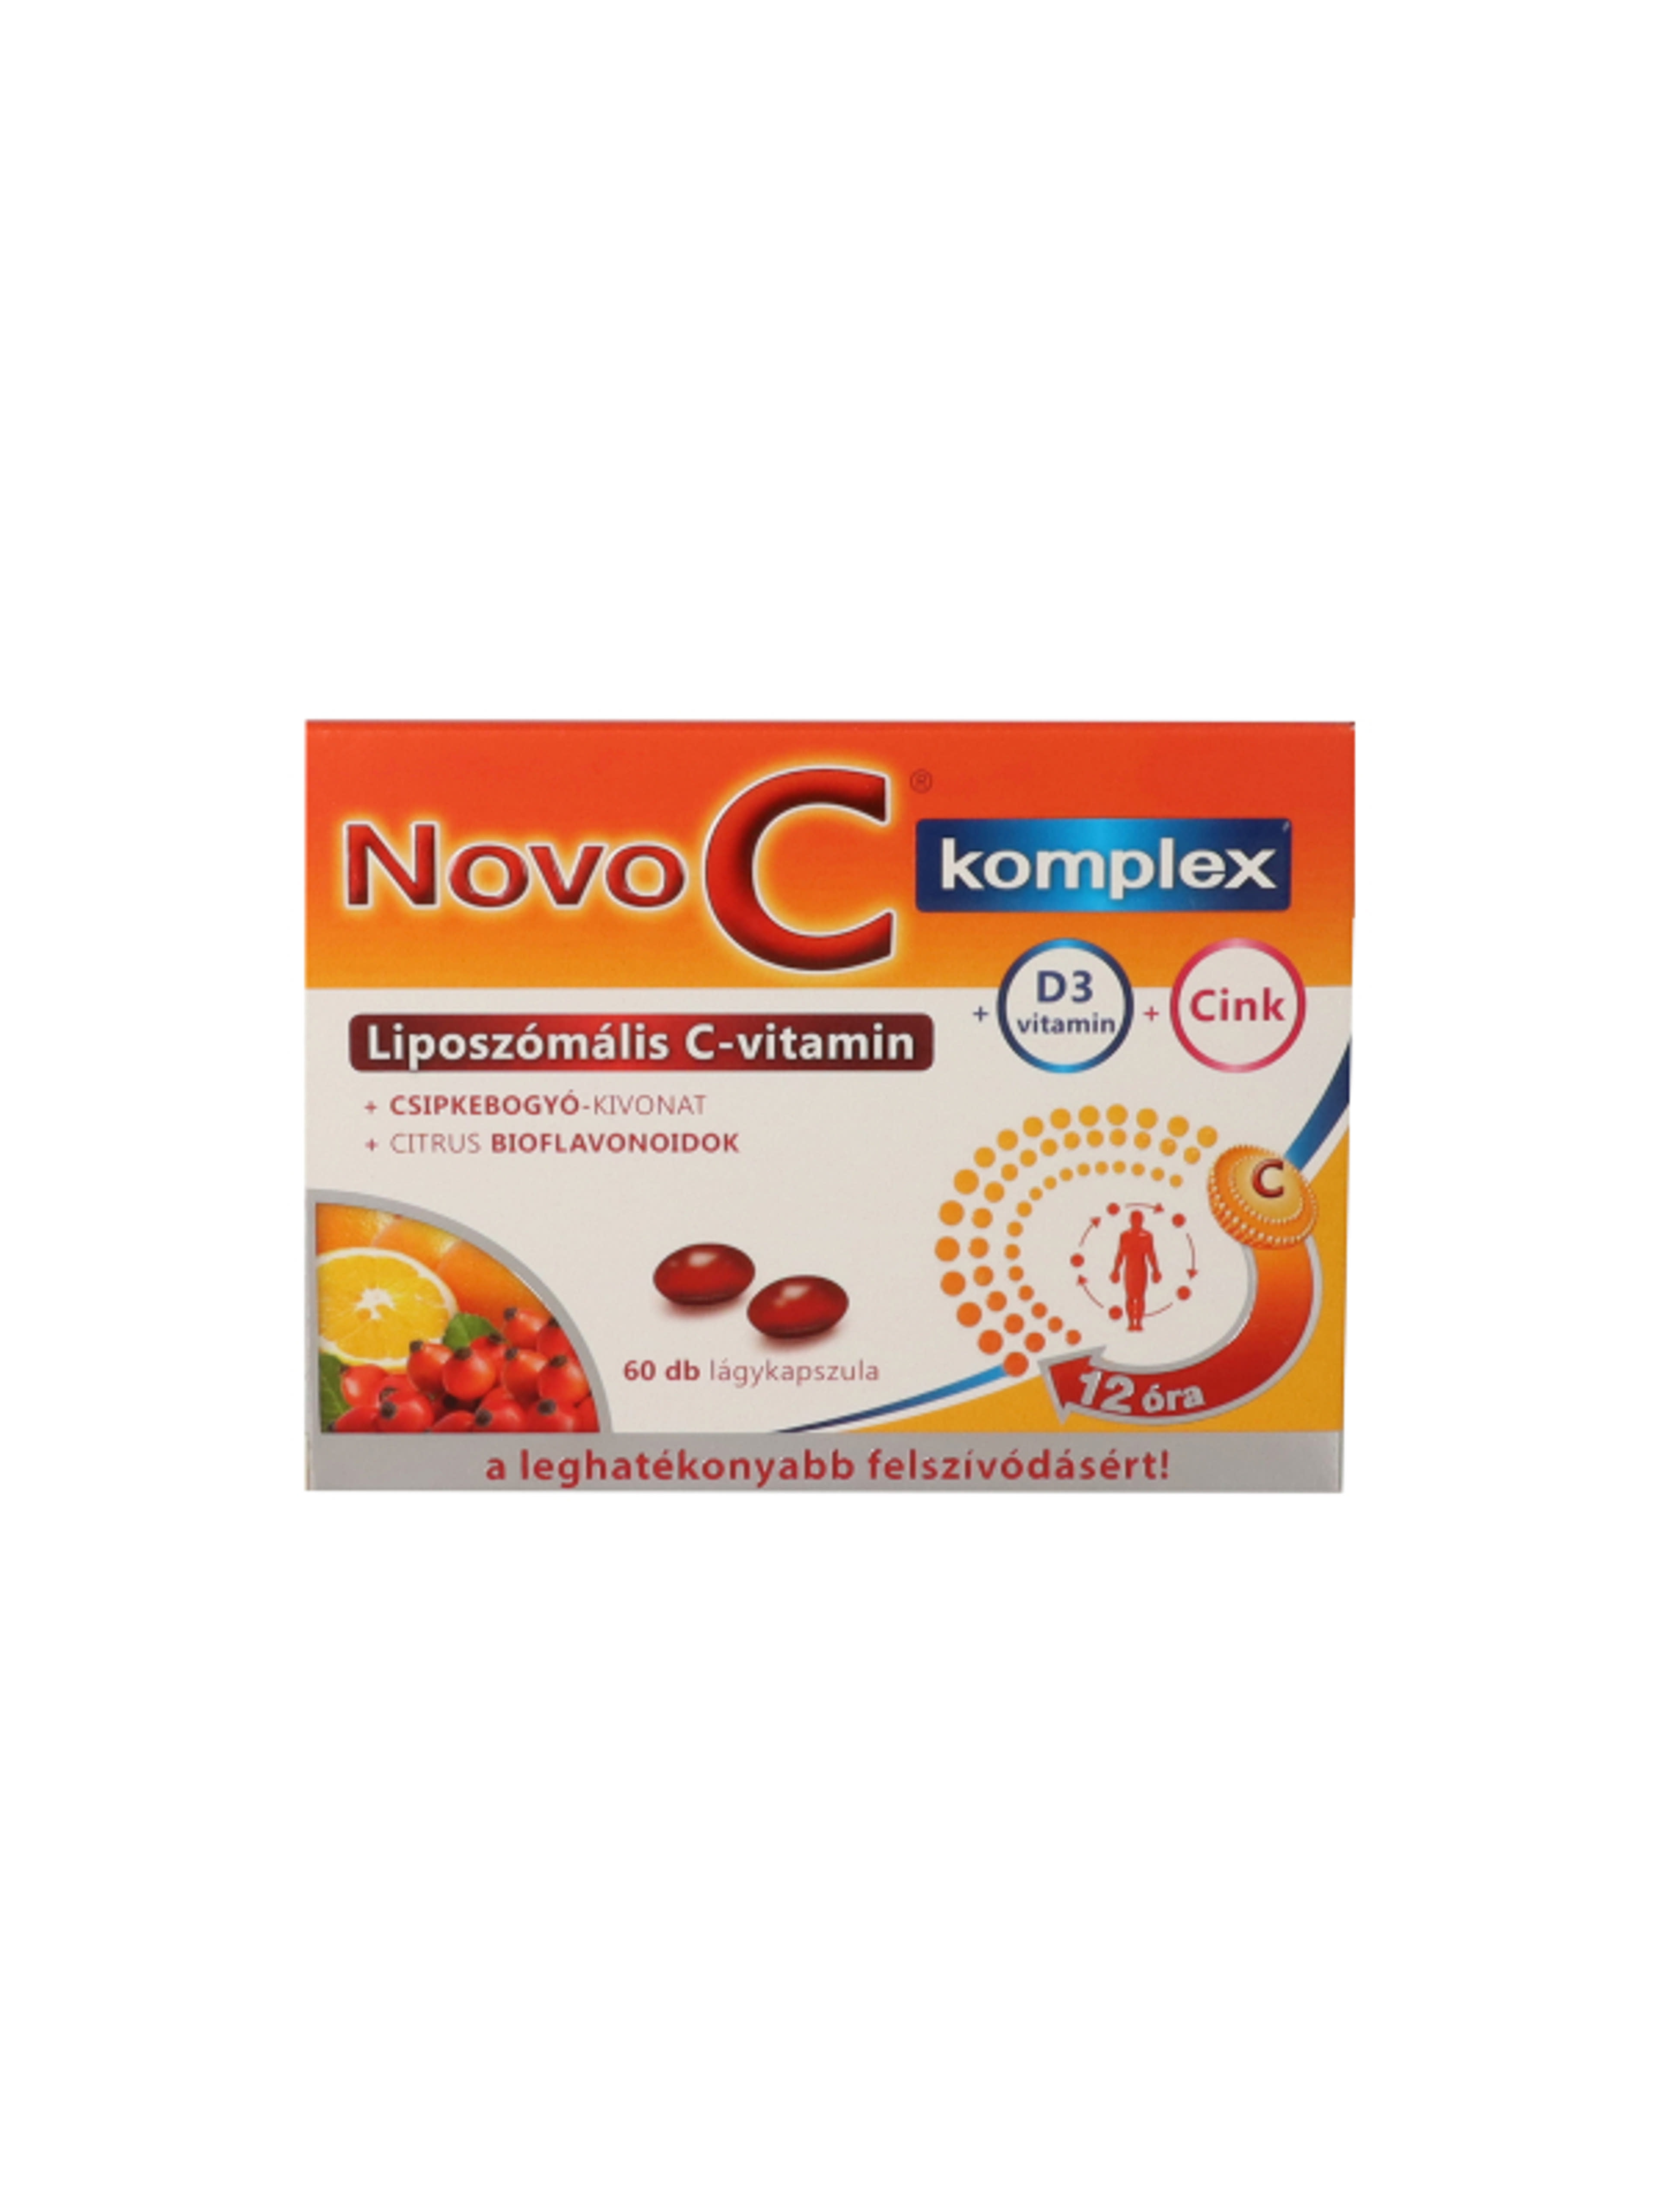 Novo C komplex liposzómás retard  C-vitamin - 60 db